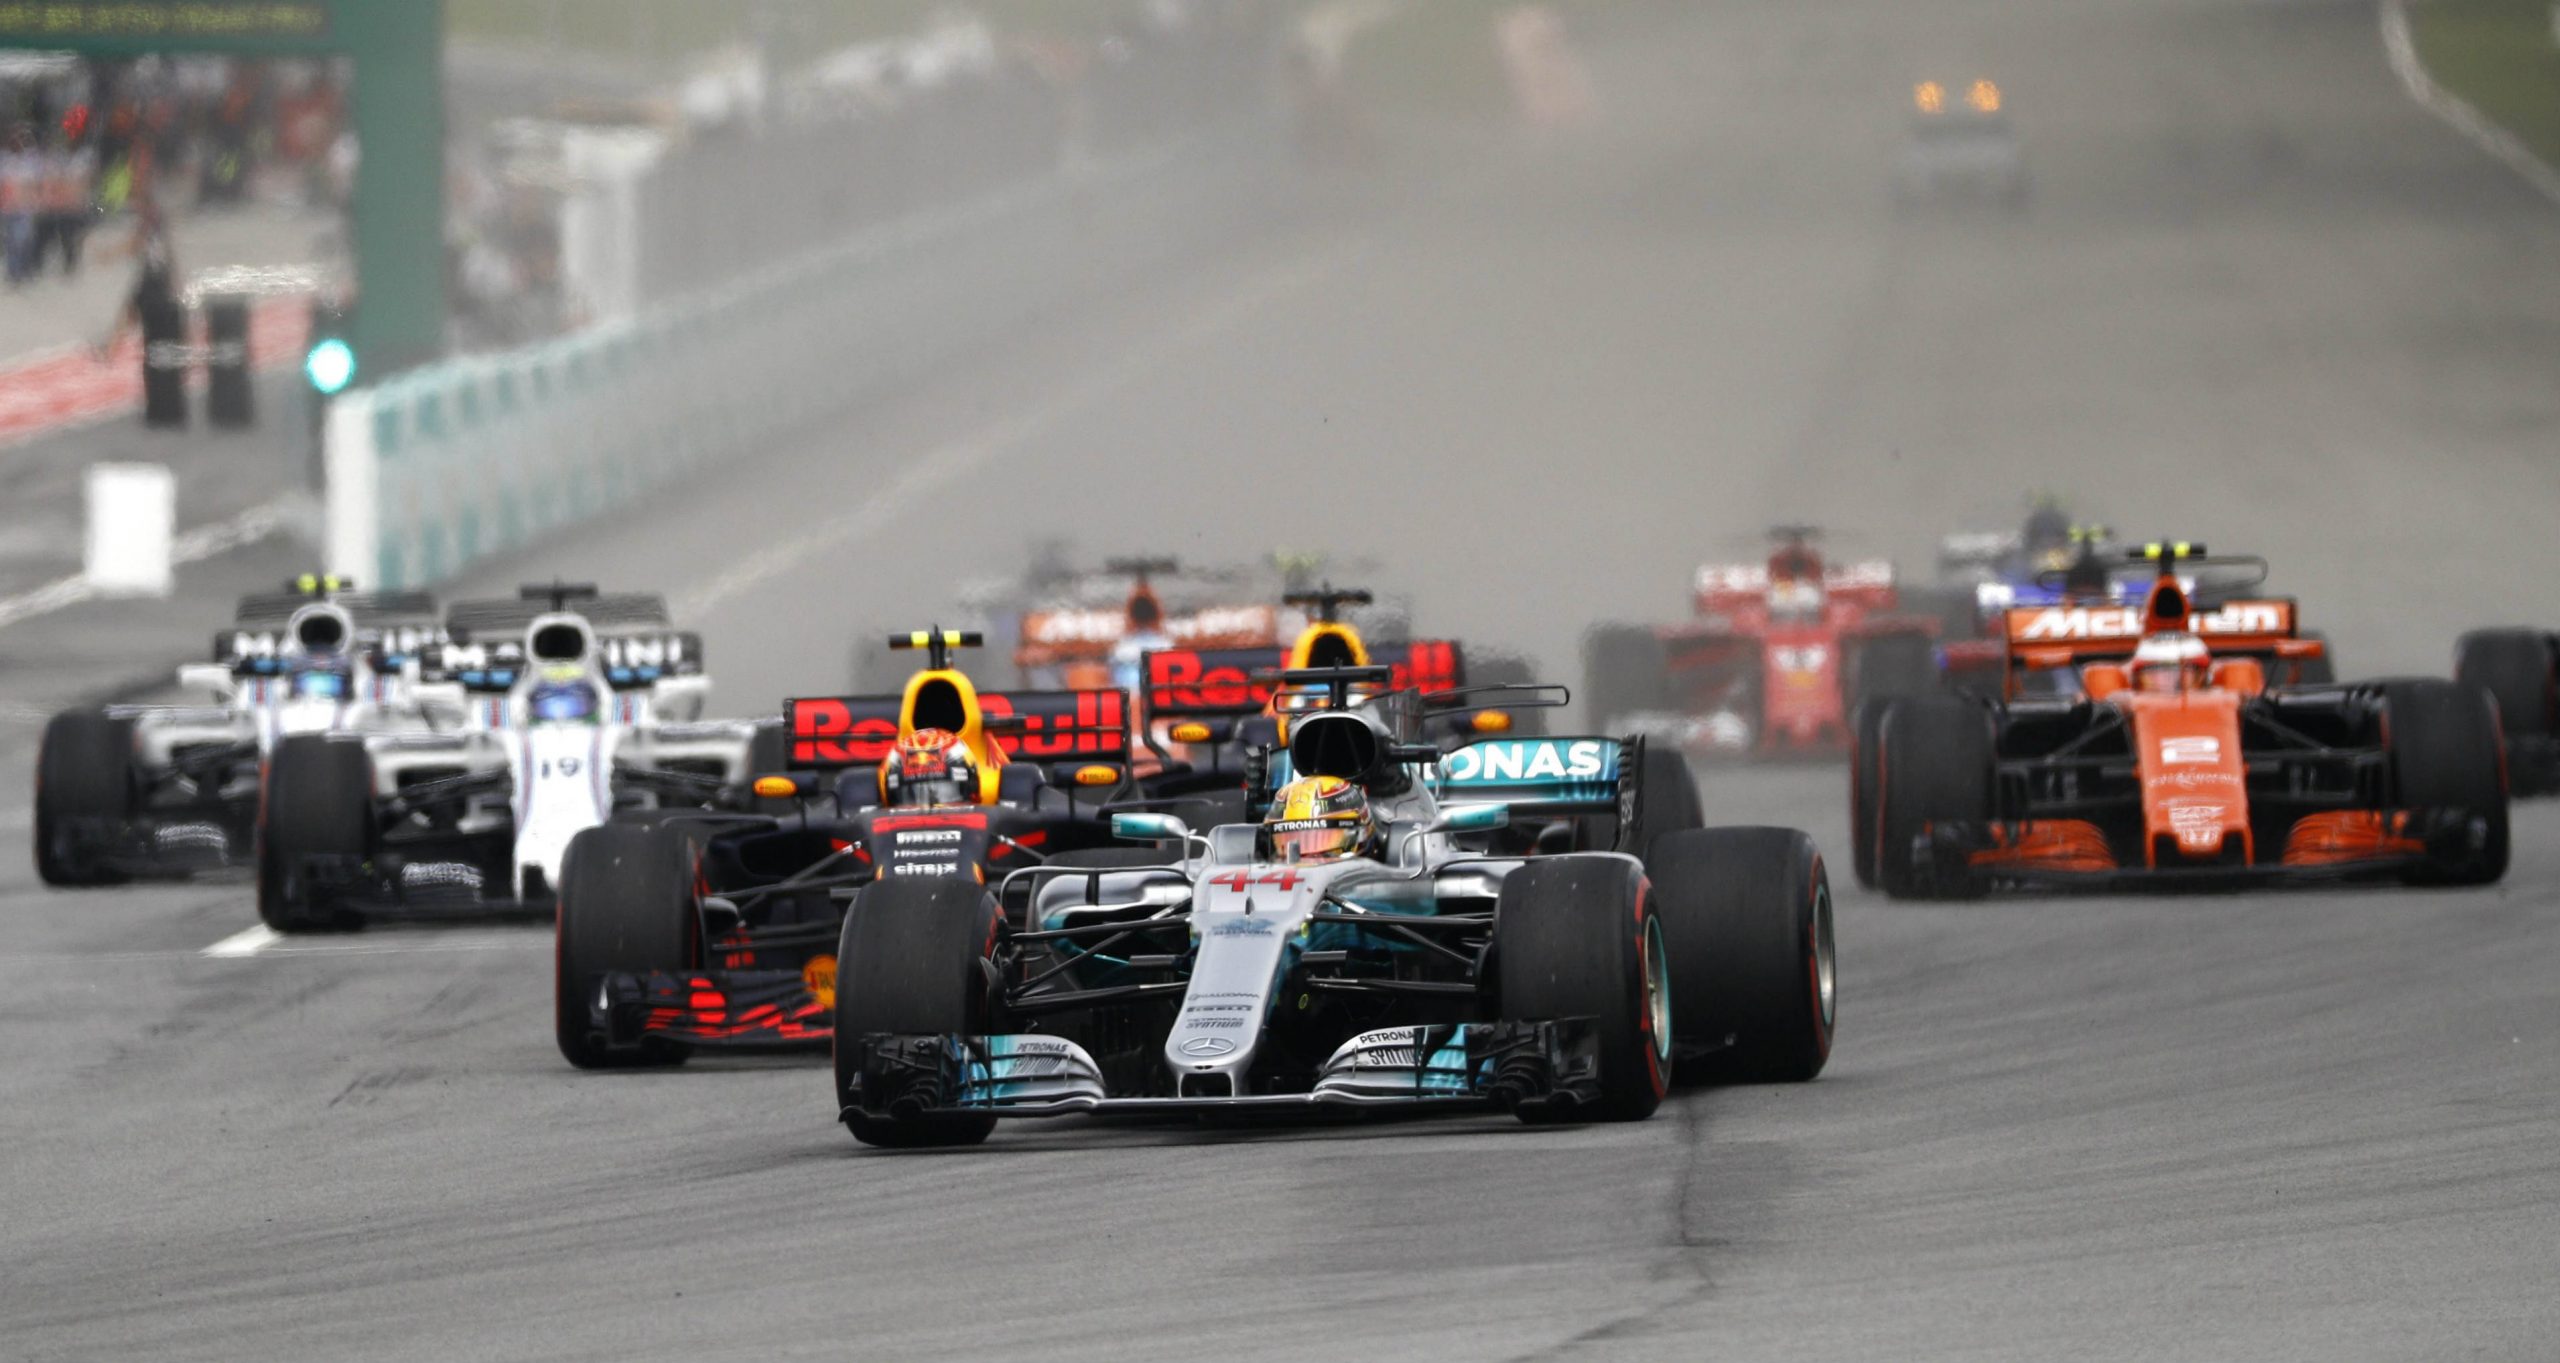 Mercedes unhappy despite extending lead in F1 title race